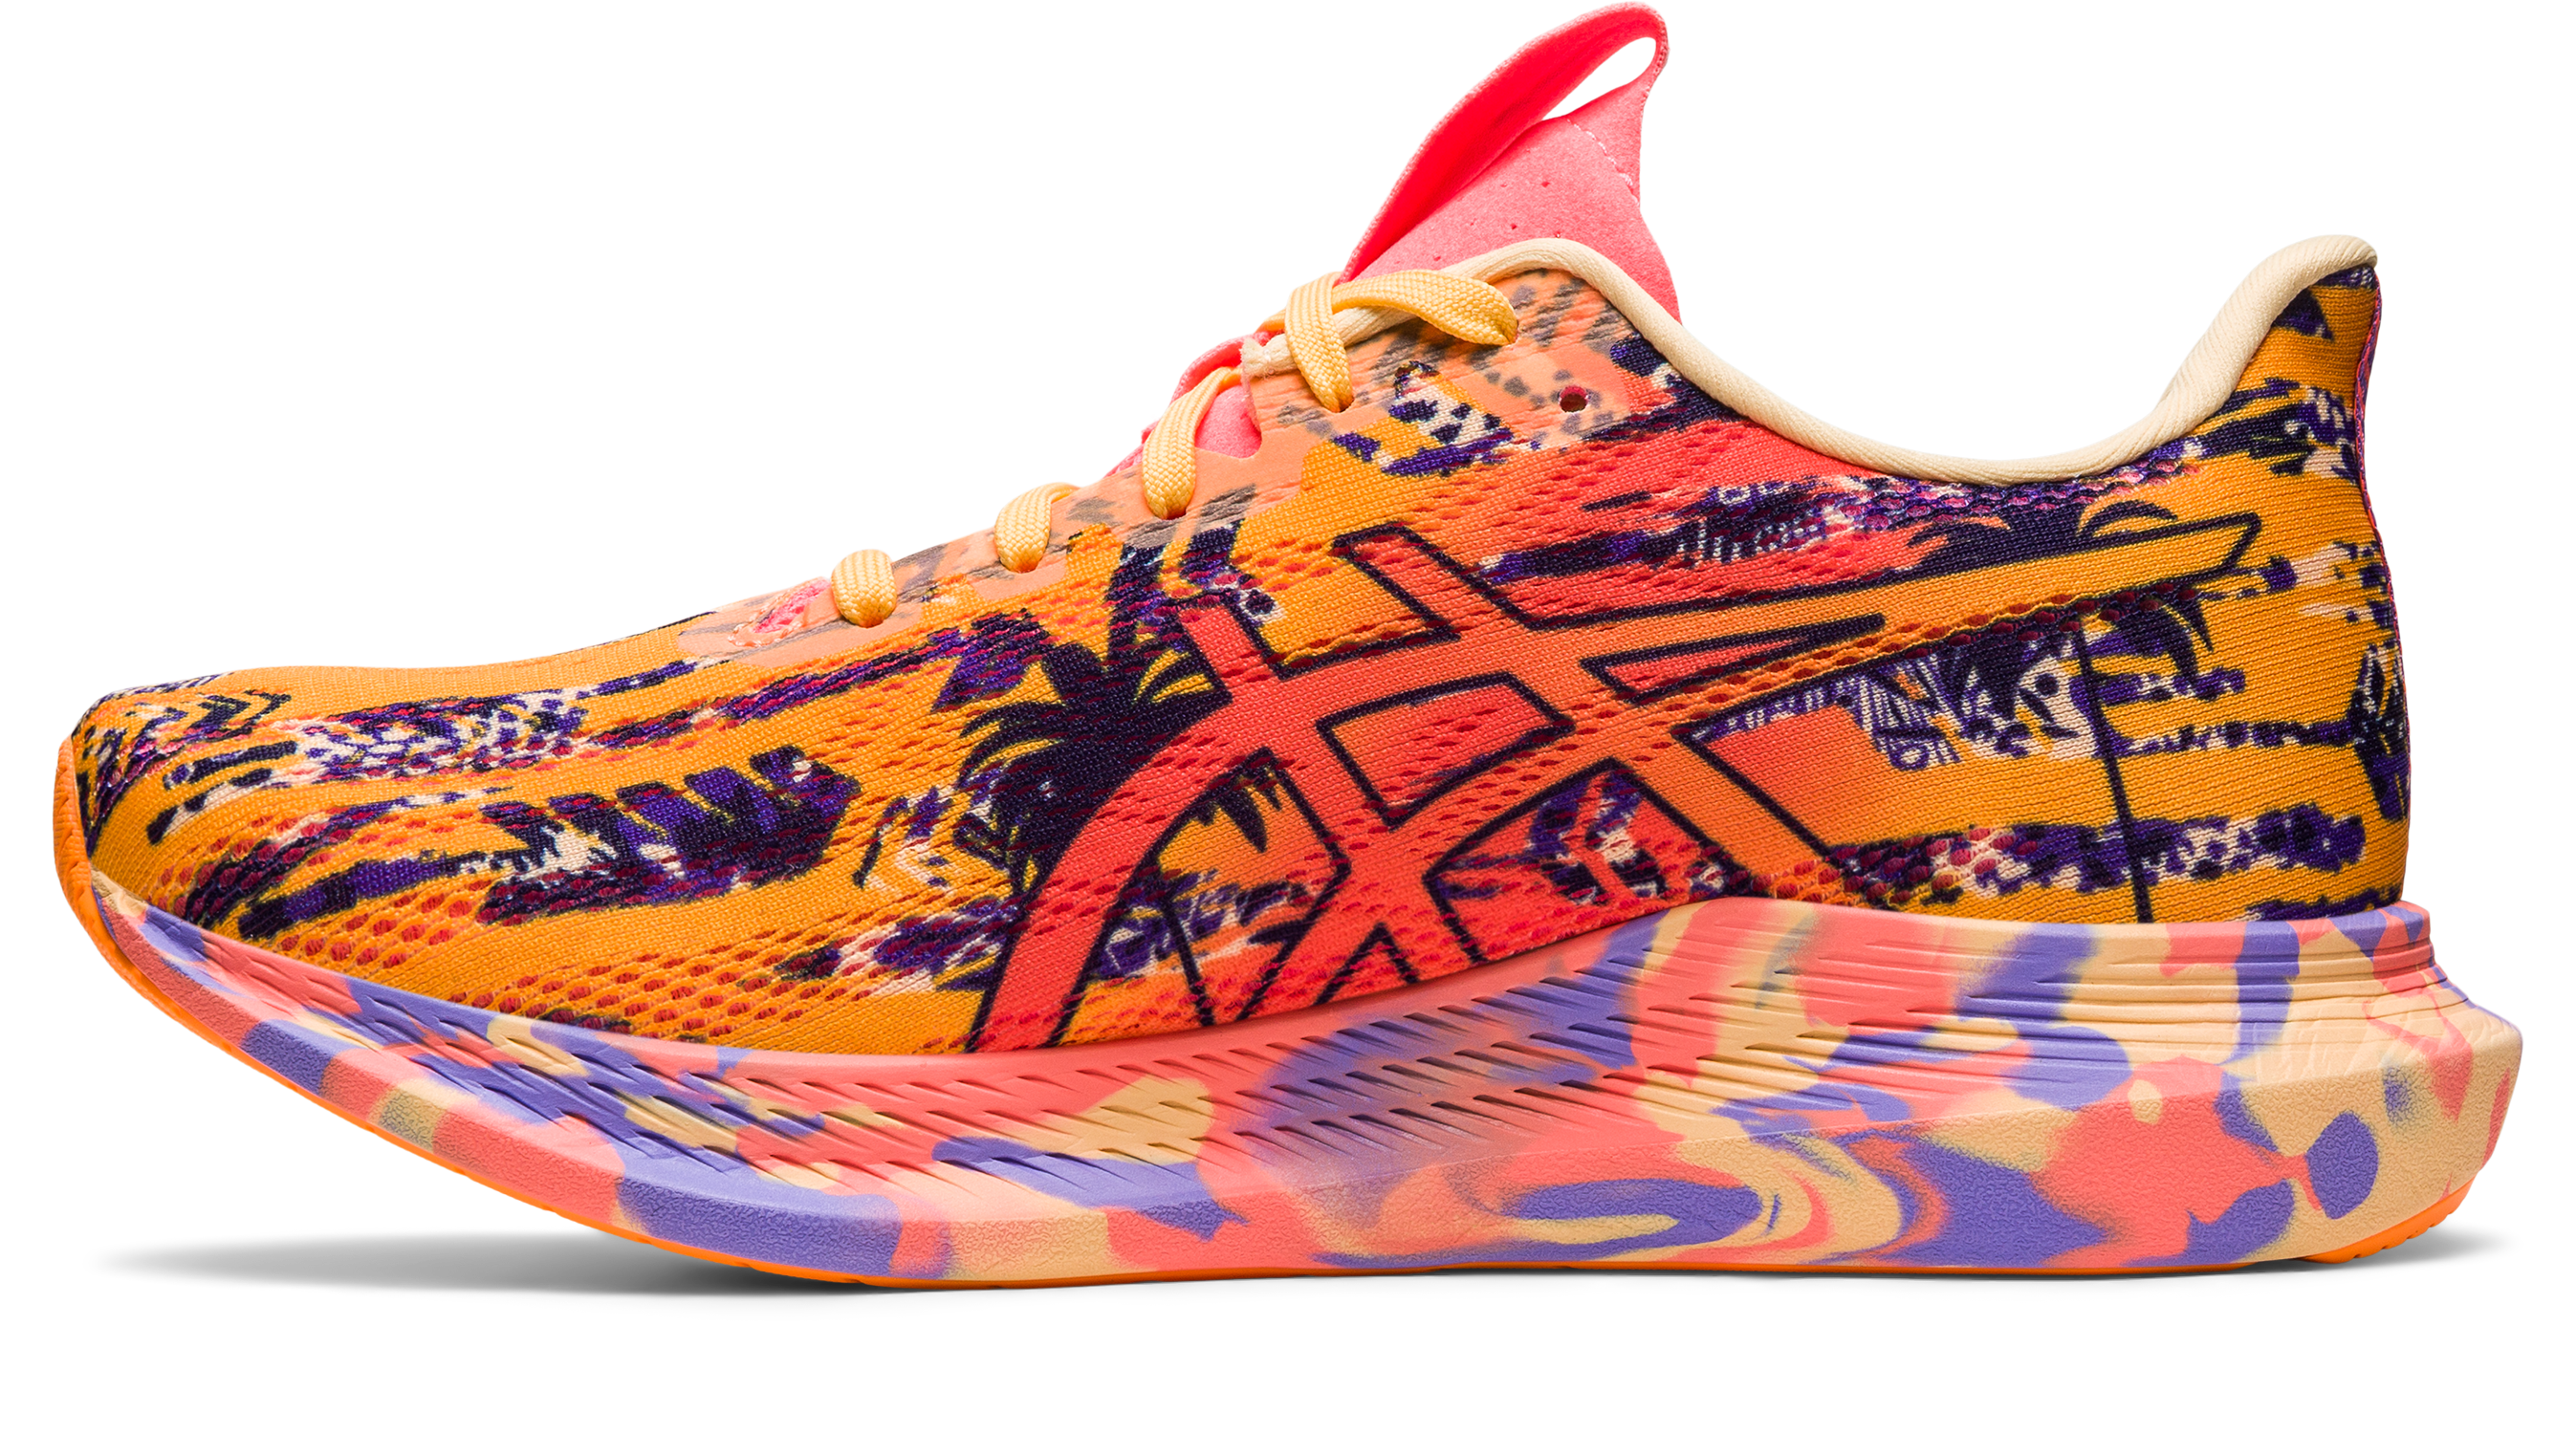 Asics Women's Gel-Noosa Tri 14 Running Shoes in Orange Pop/Blazing Coral